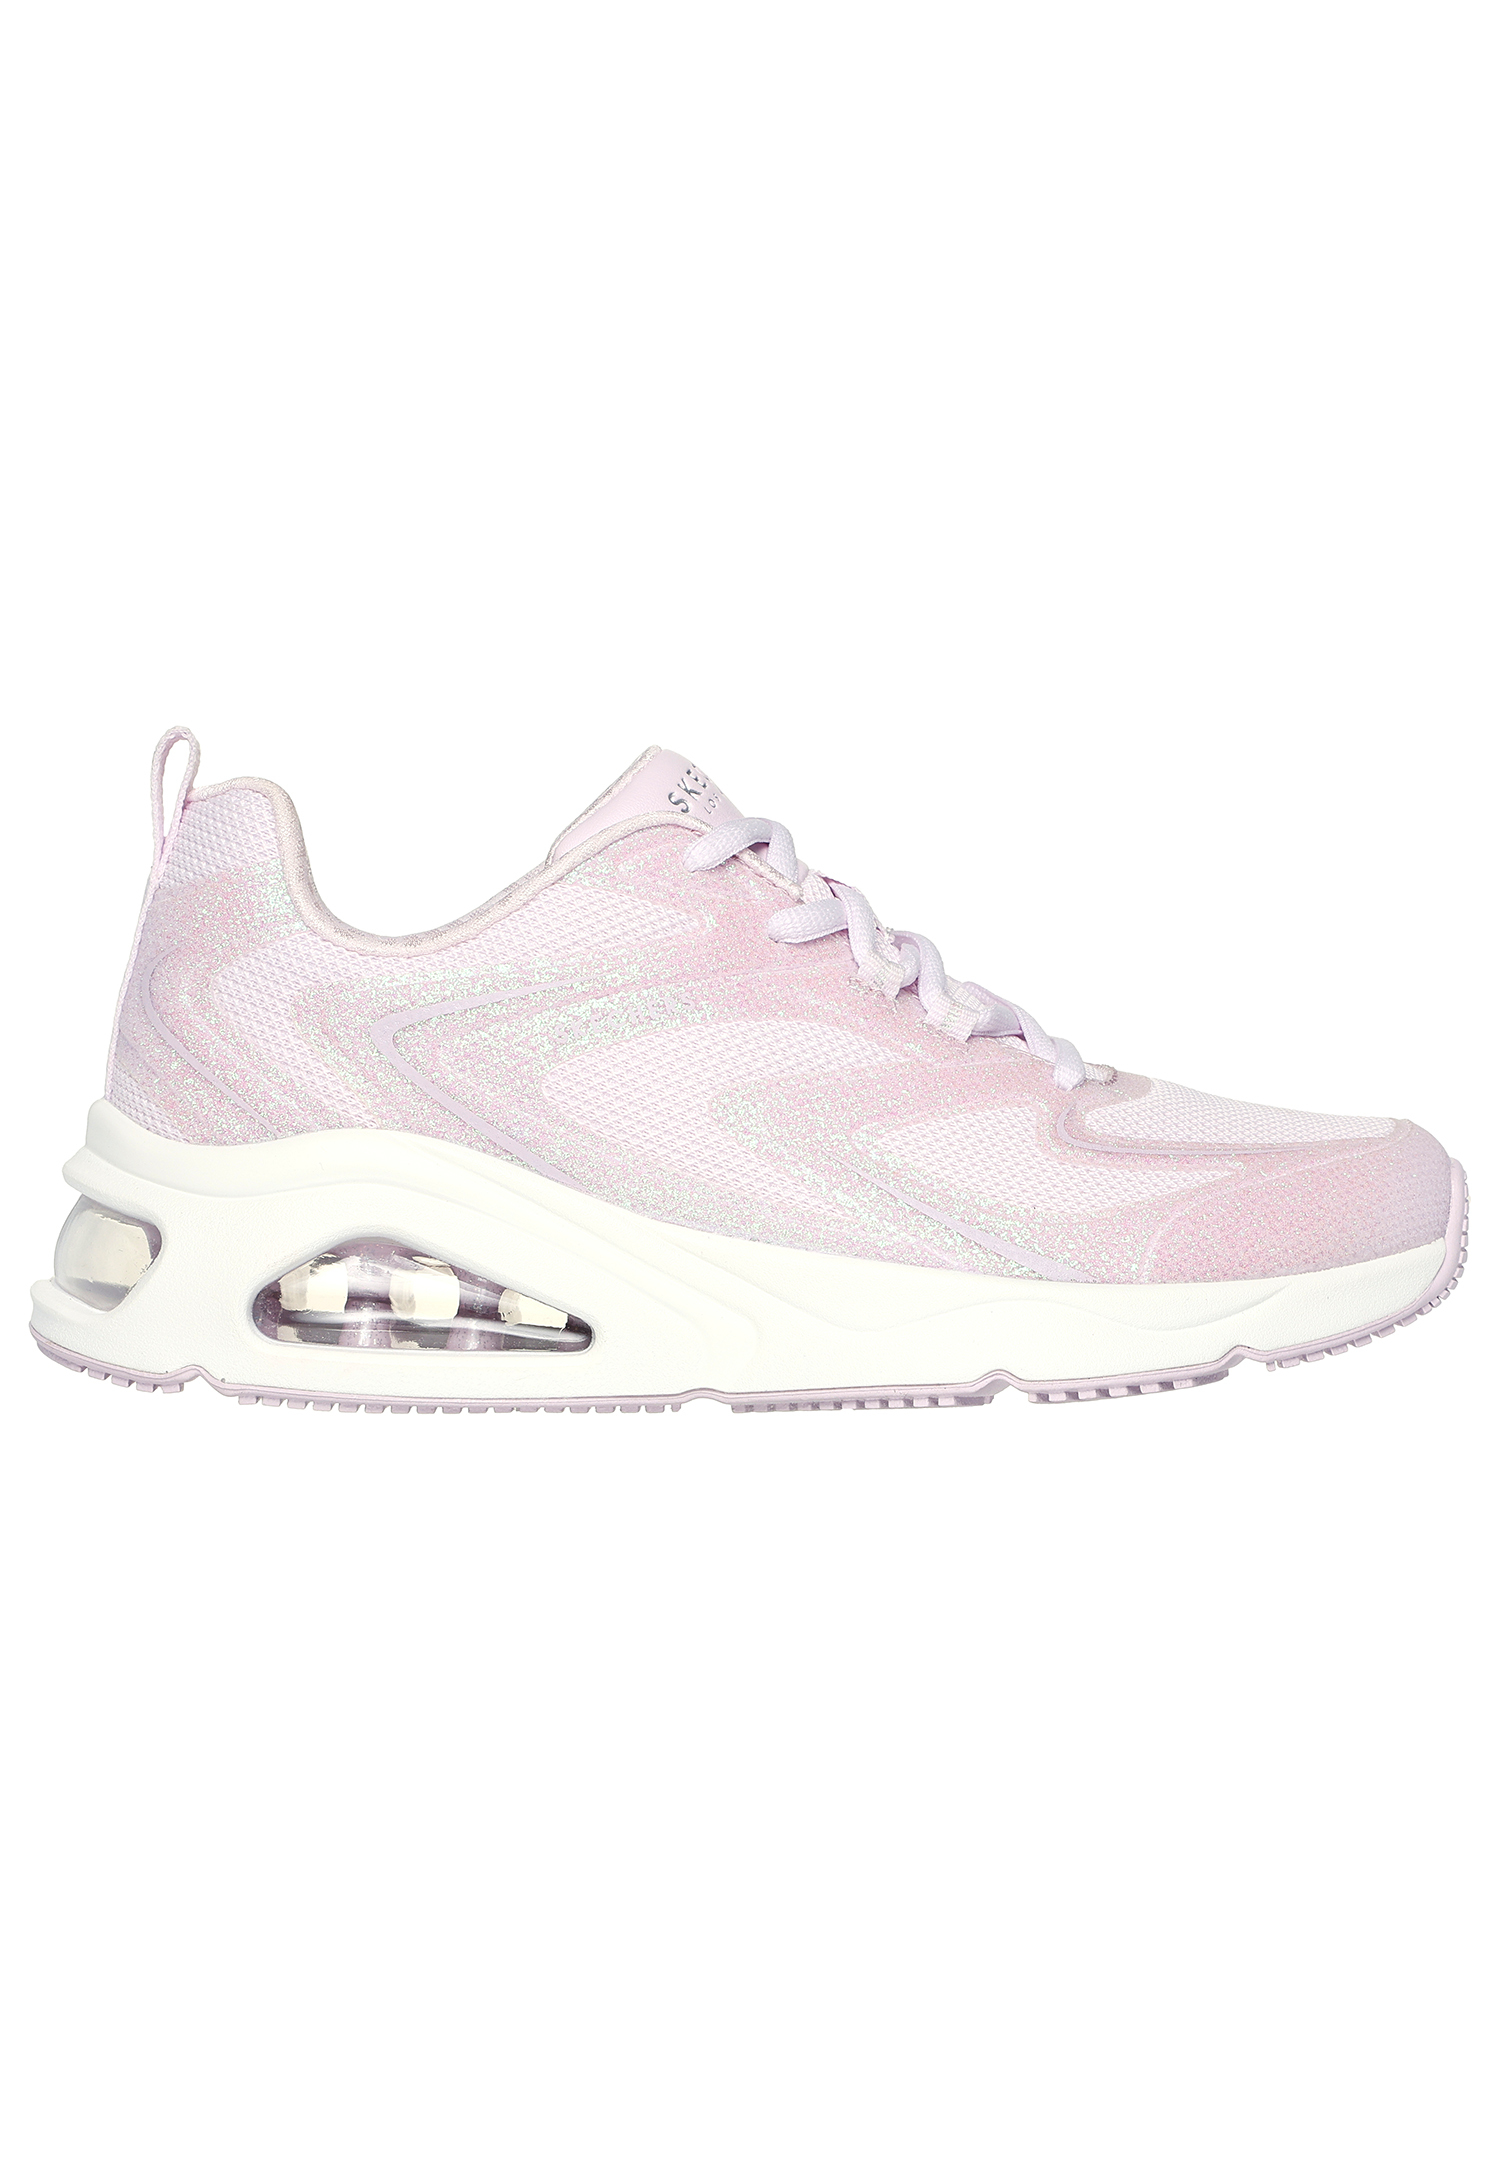 Skechers Street TRES-AIR - Glit-Airy Sneakers Damen pink 177411 LTPK 